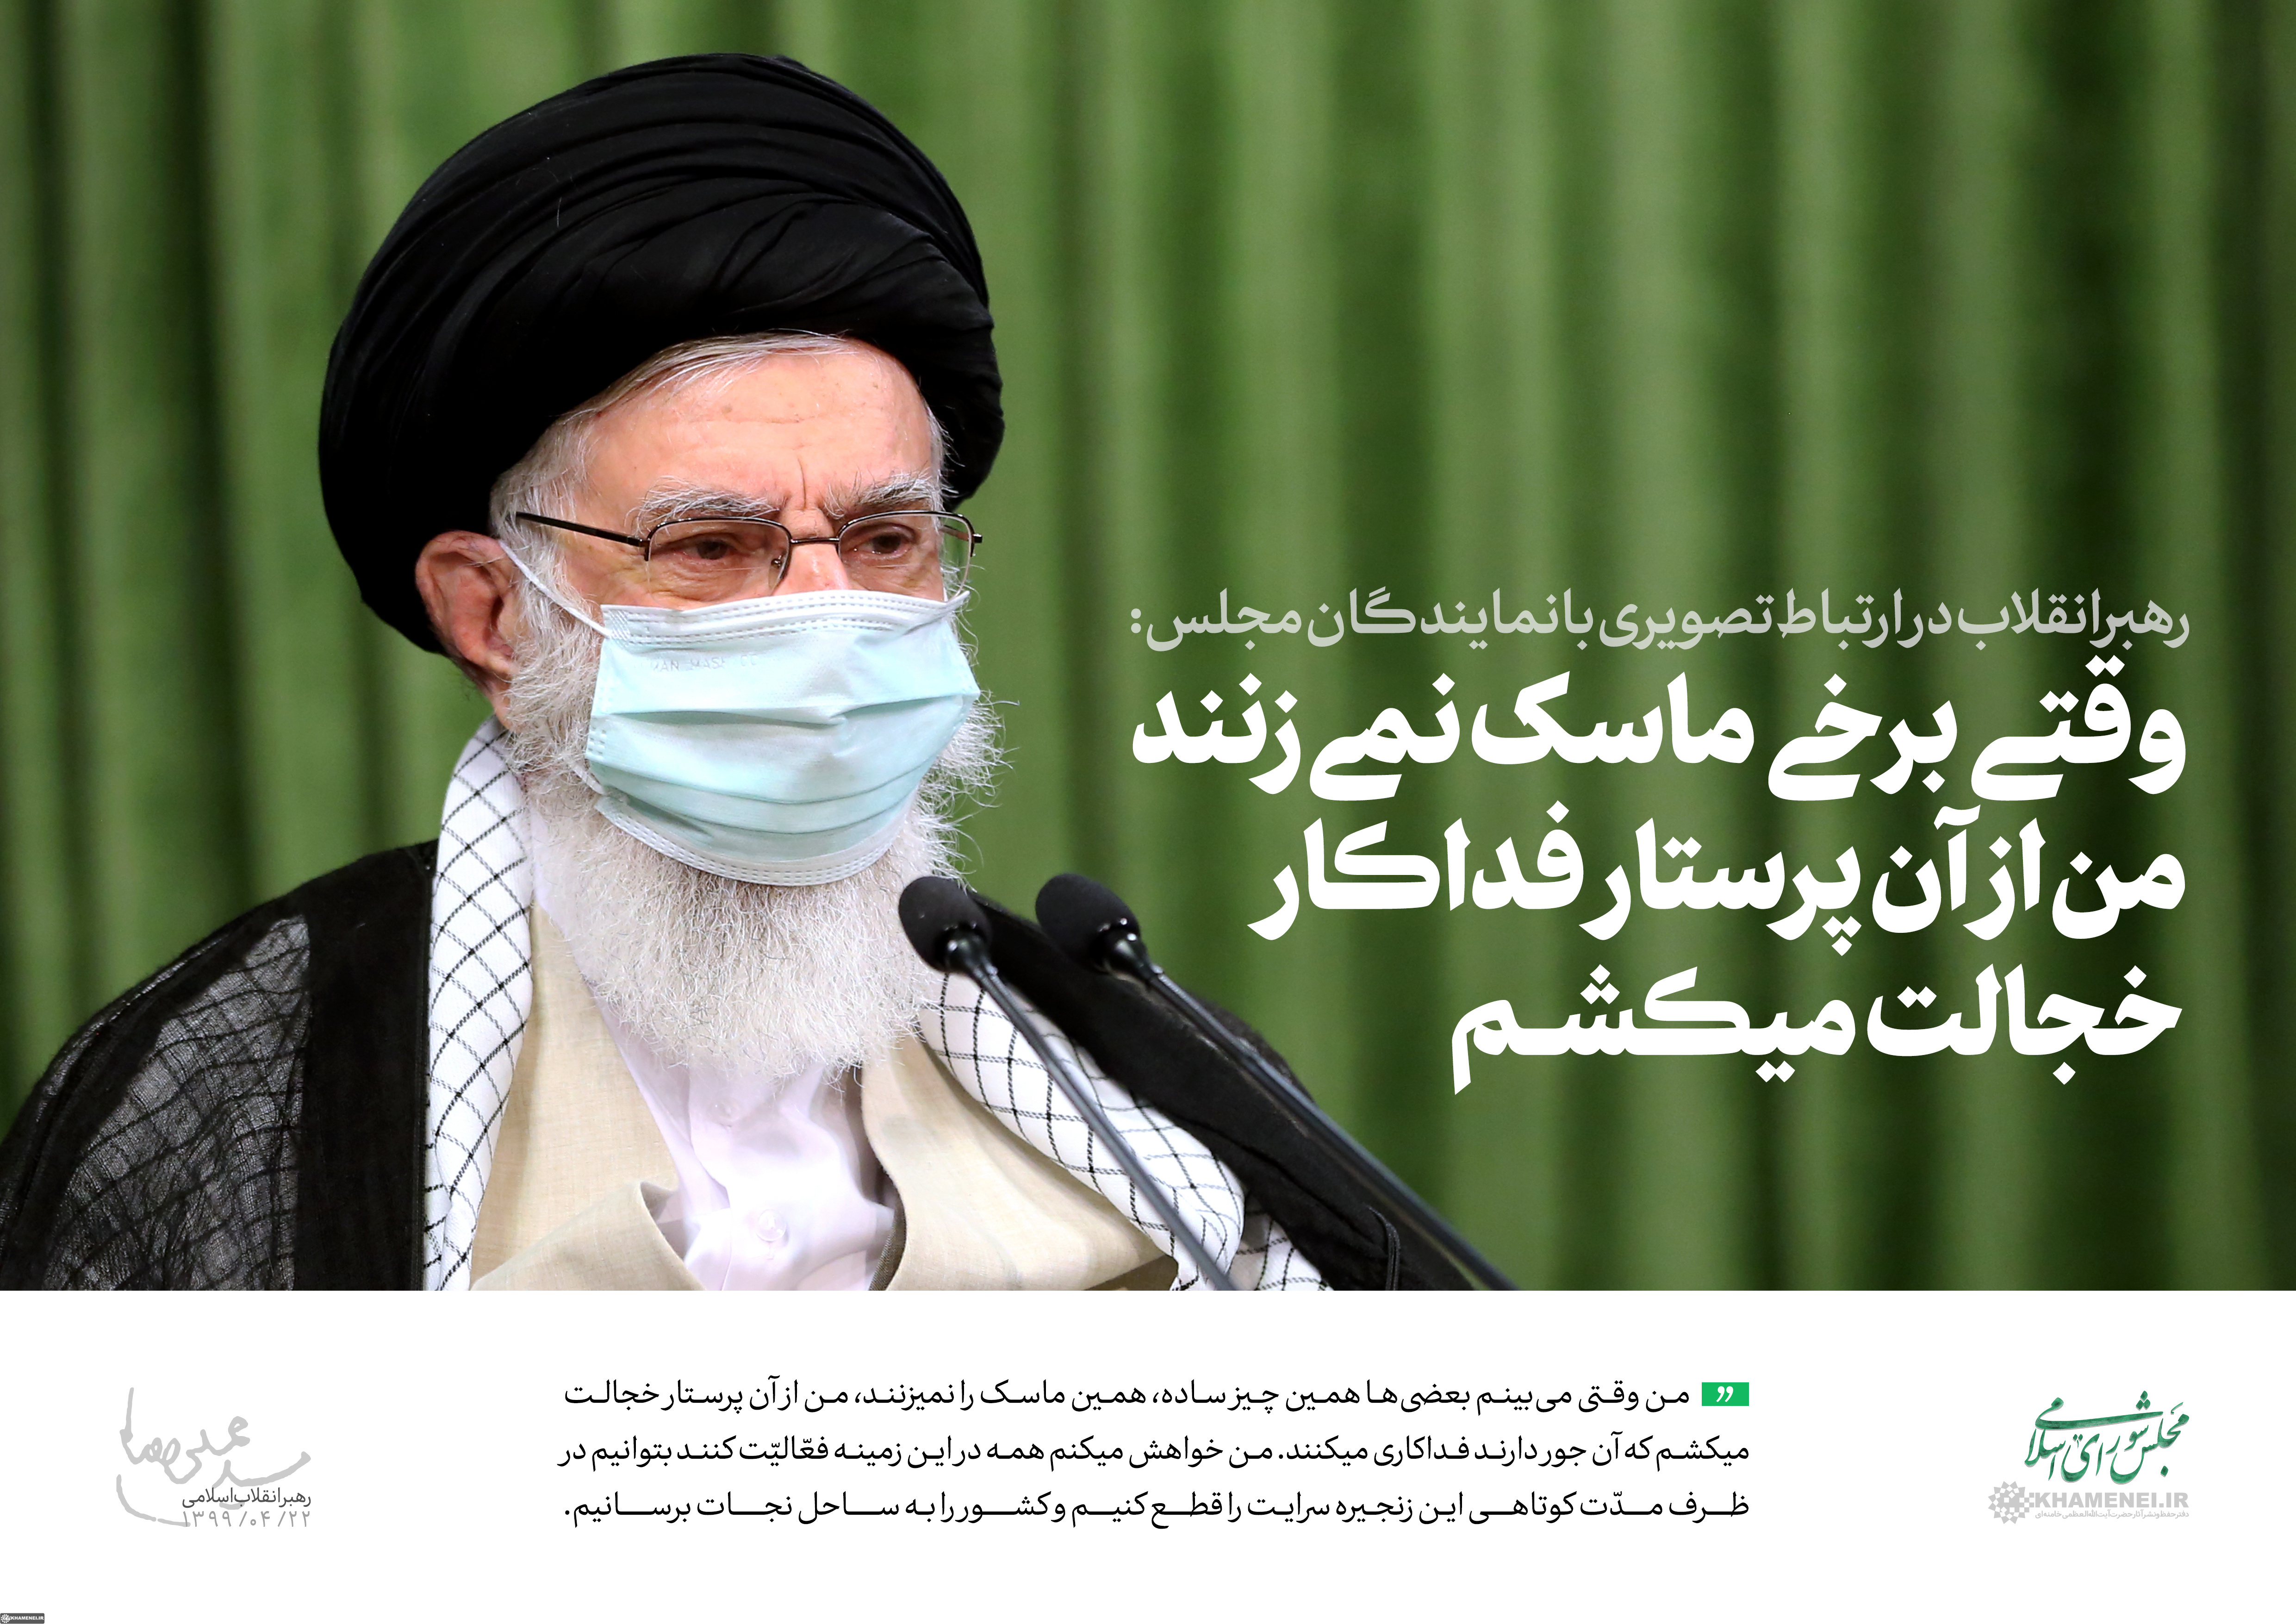 https://idc0-cdn0.khamenei.ir/ndata/news/46043/B/13990422_0346043.jpg